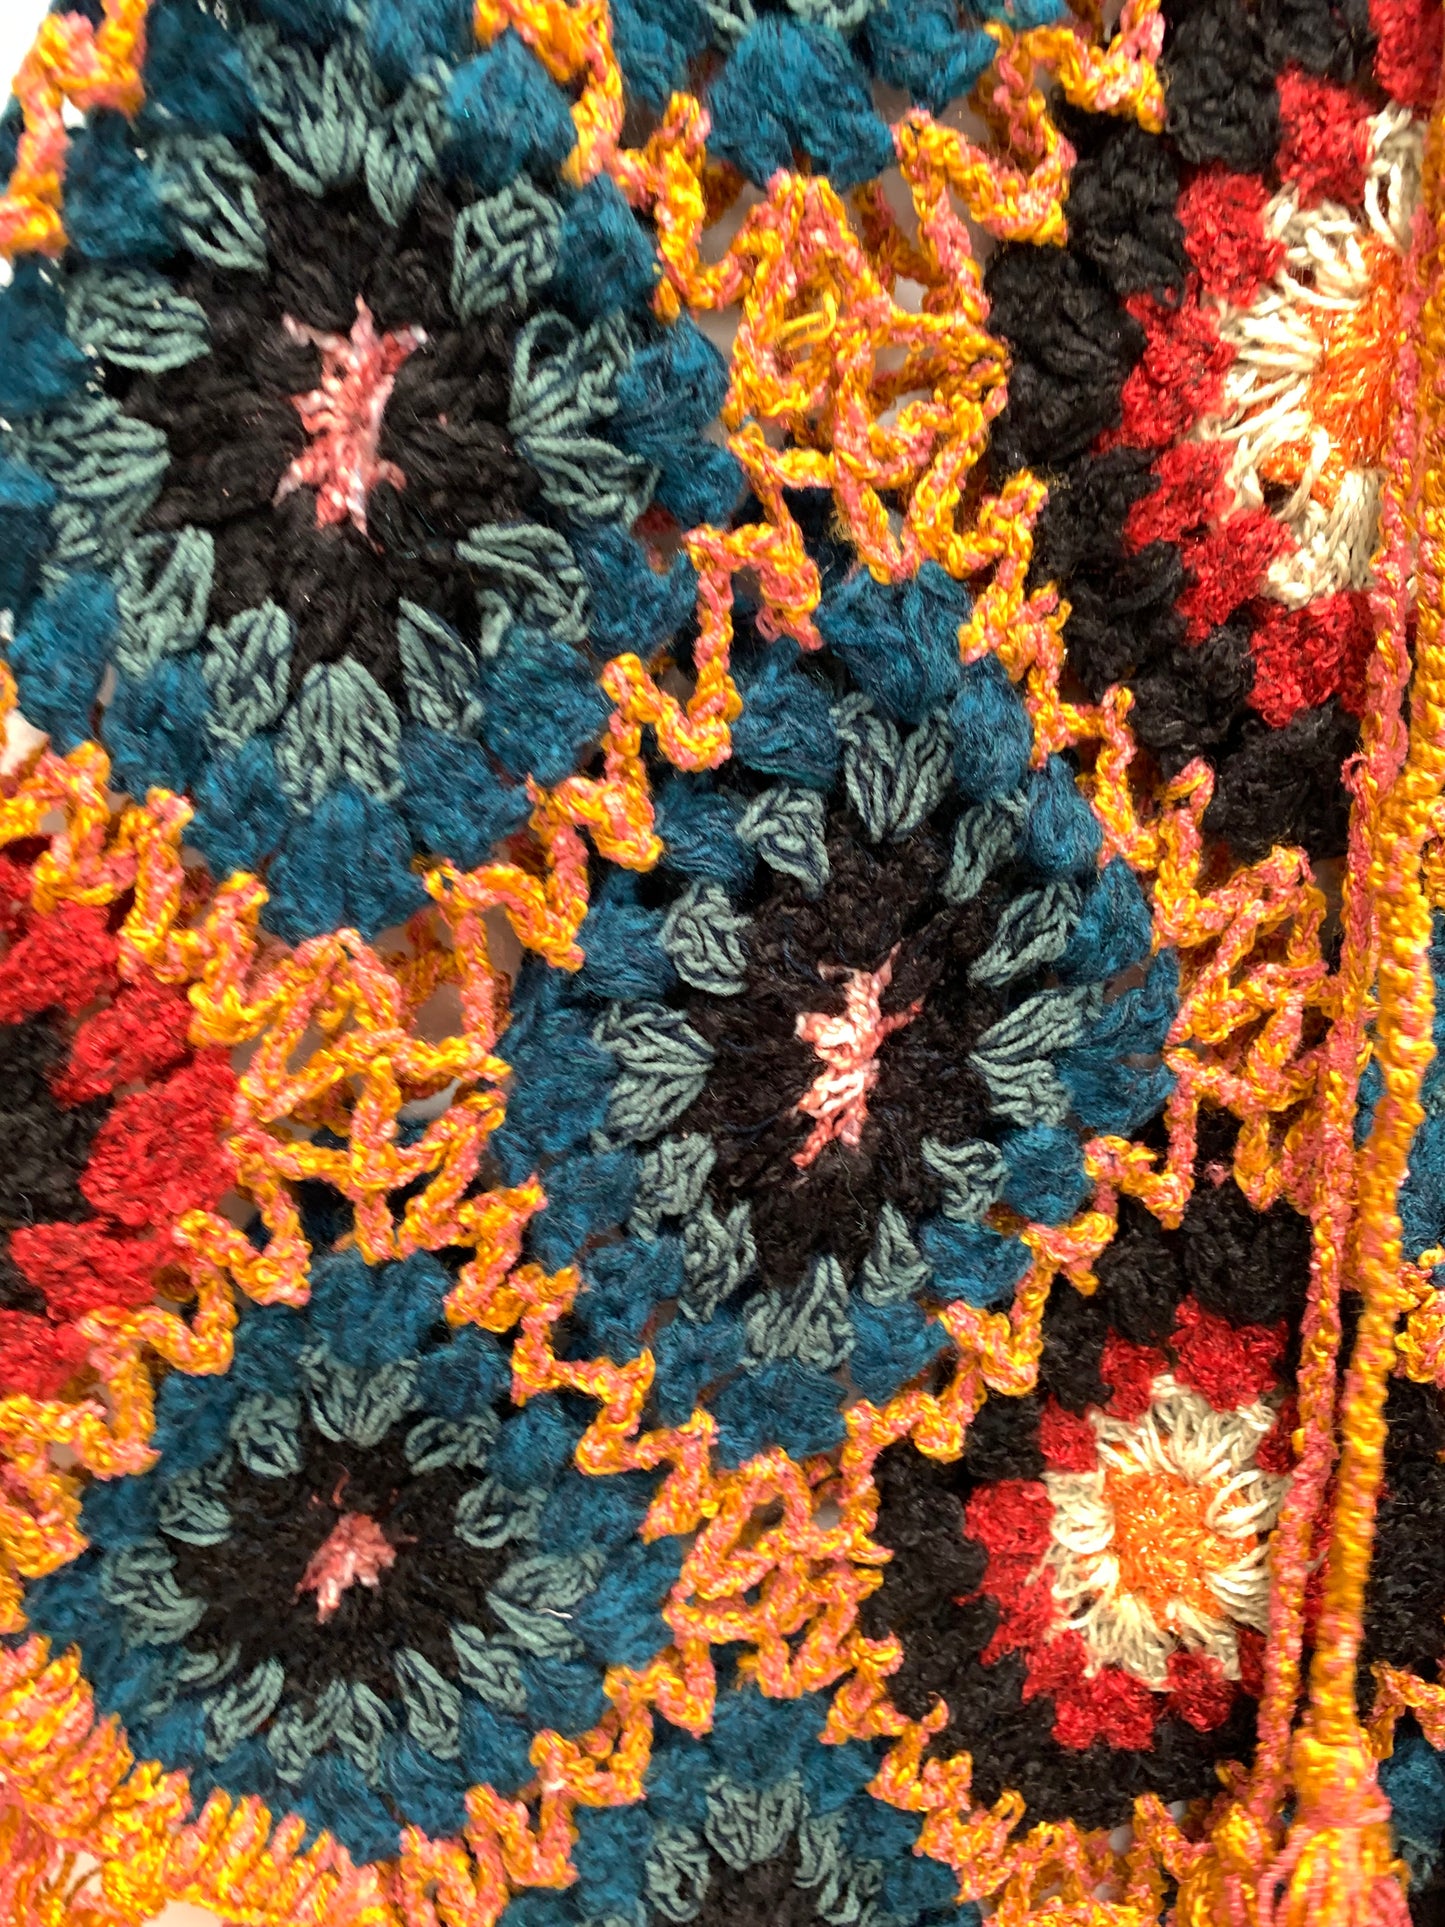 Boho handcrafted Crochet poncho #332264